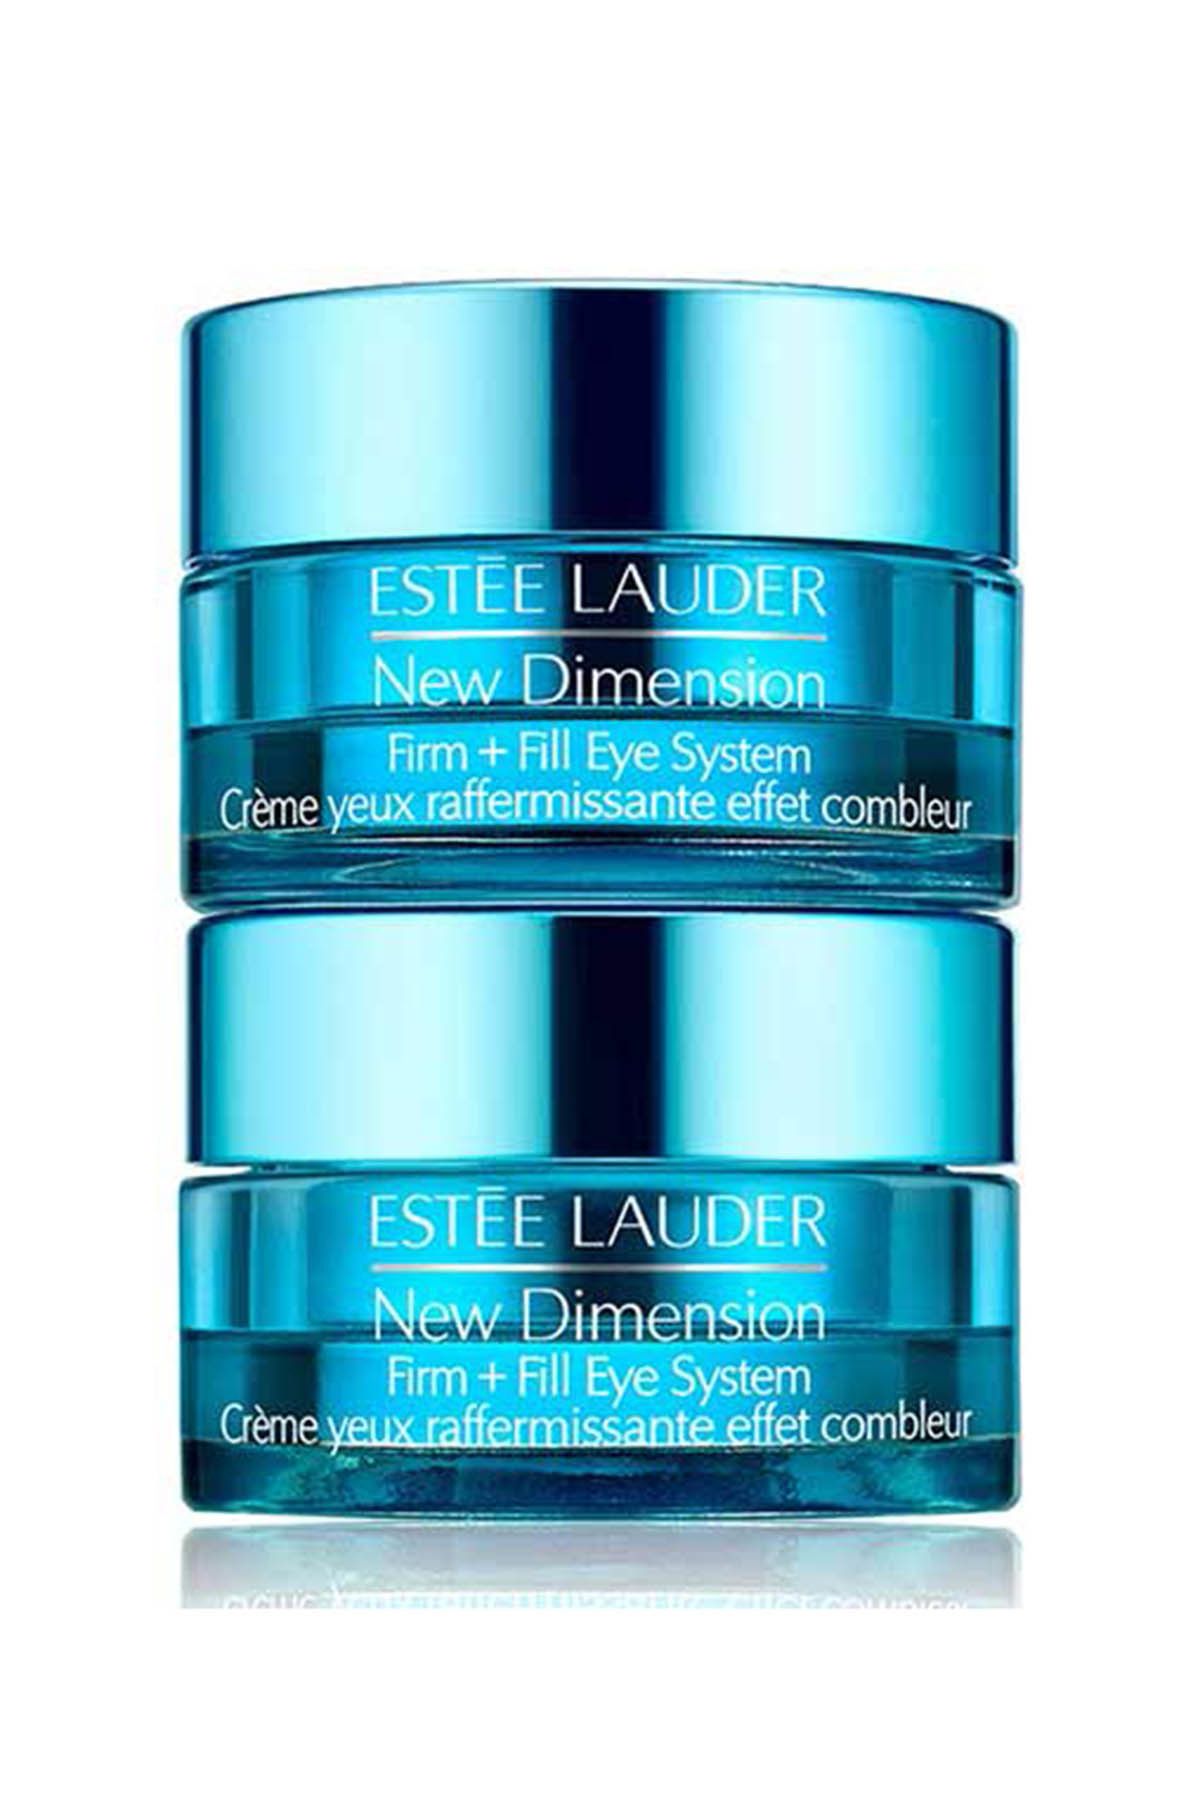 Estee Lauder Göz Bakım Kremi - New Dimension Firm + Fill Eye System 10 ml 887167205796